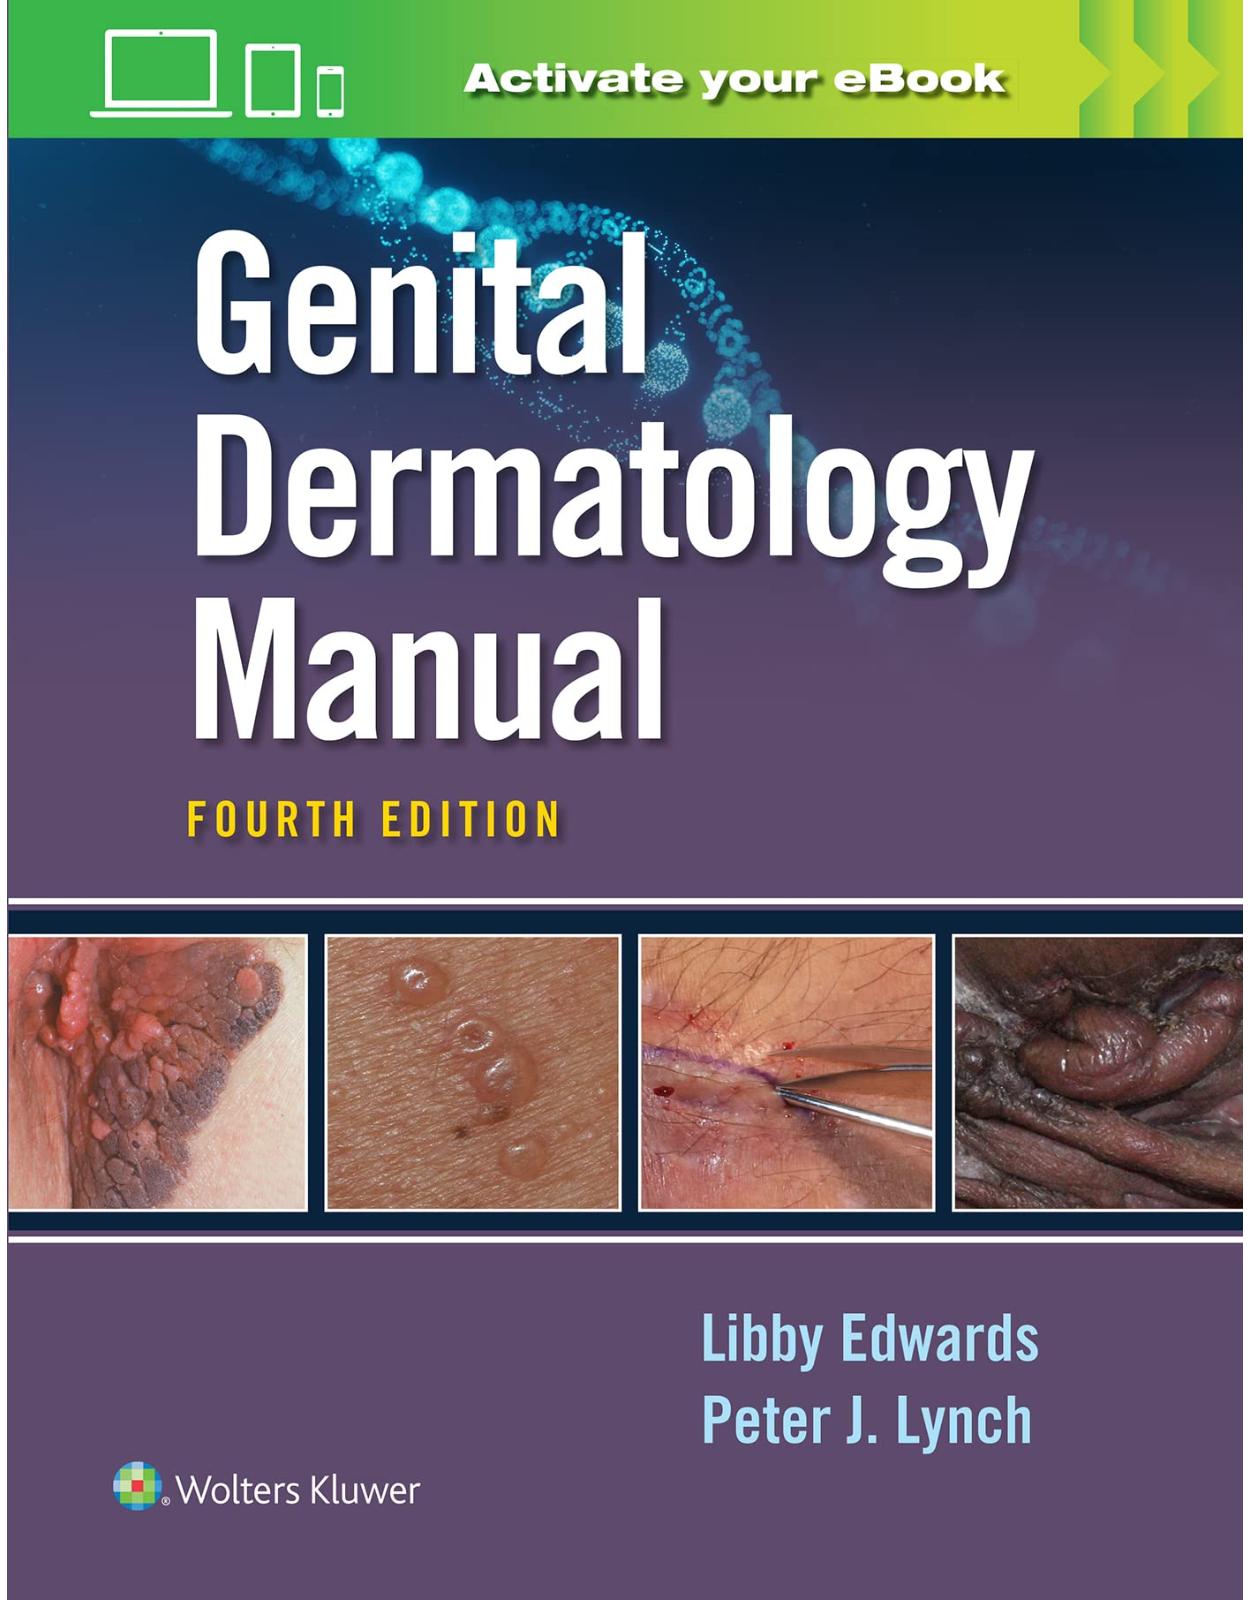 Genital Dermatology Manual